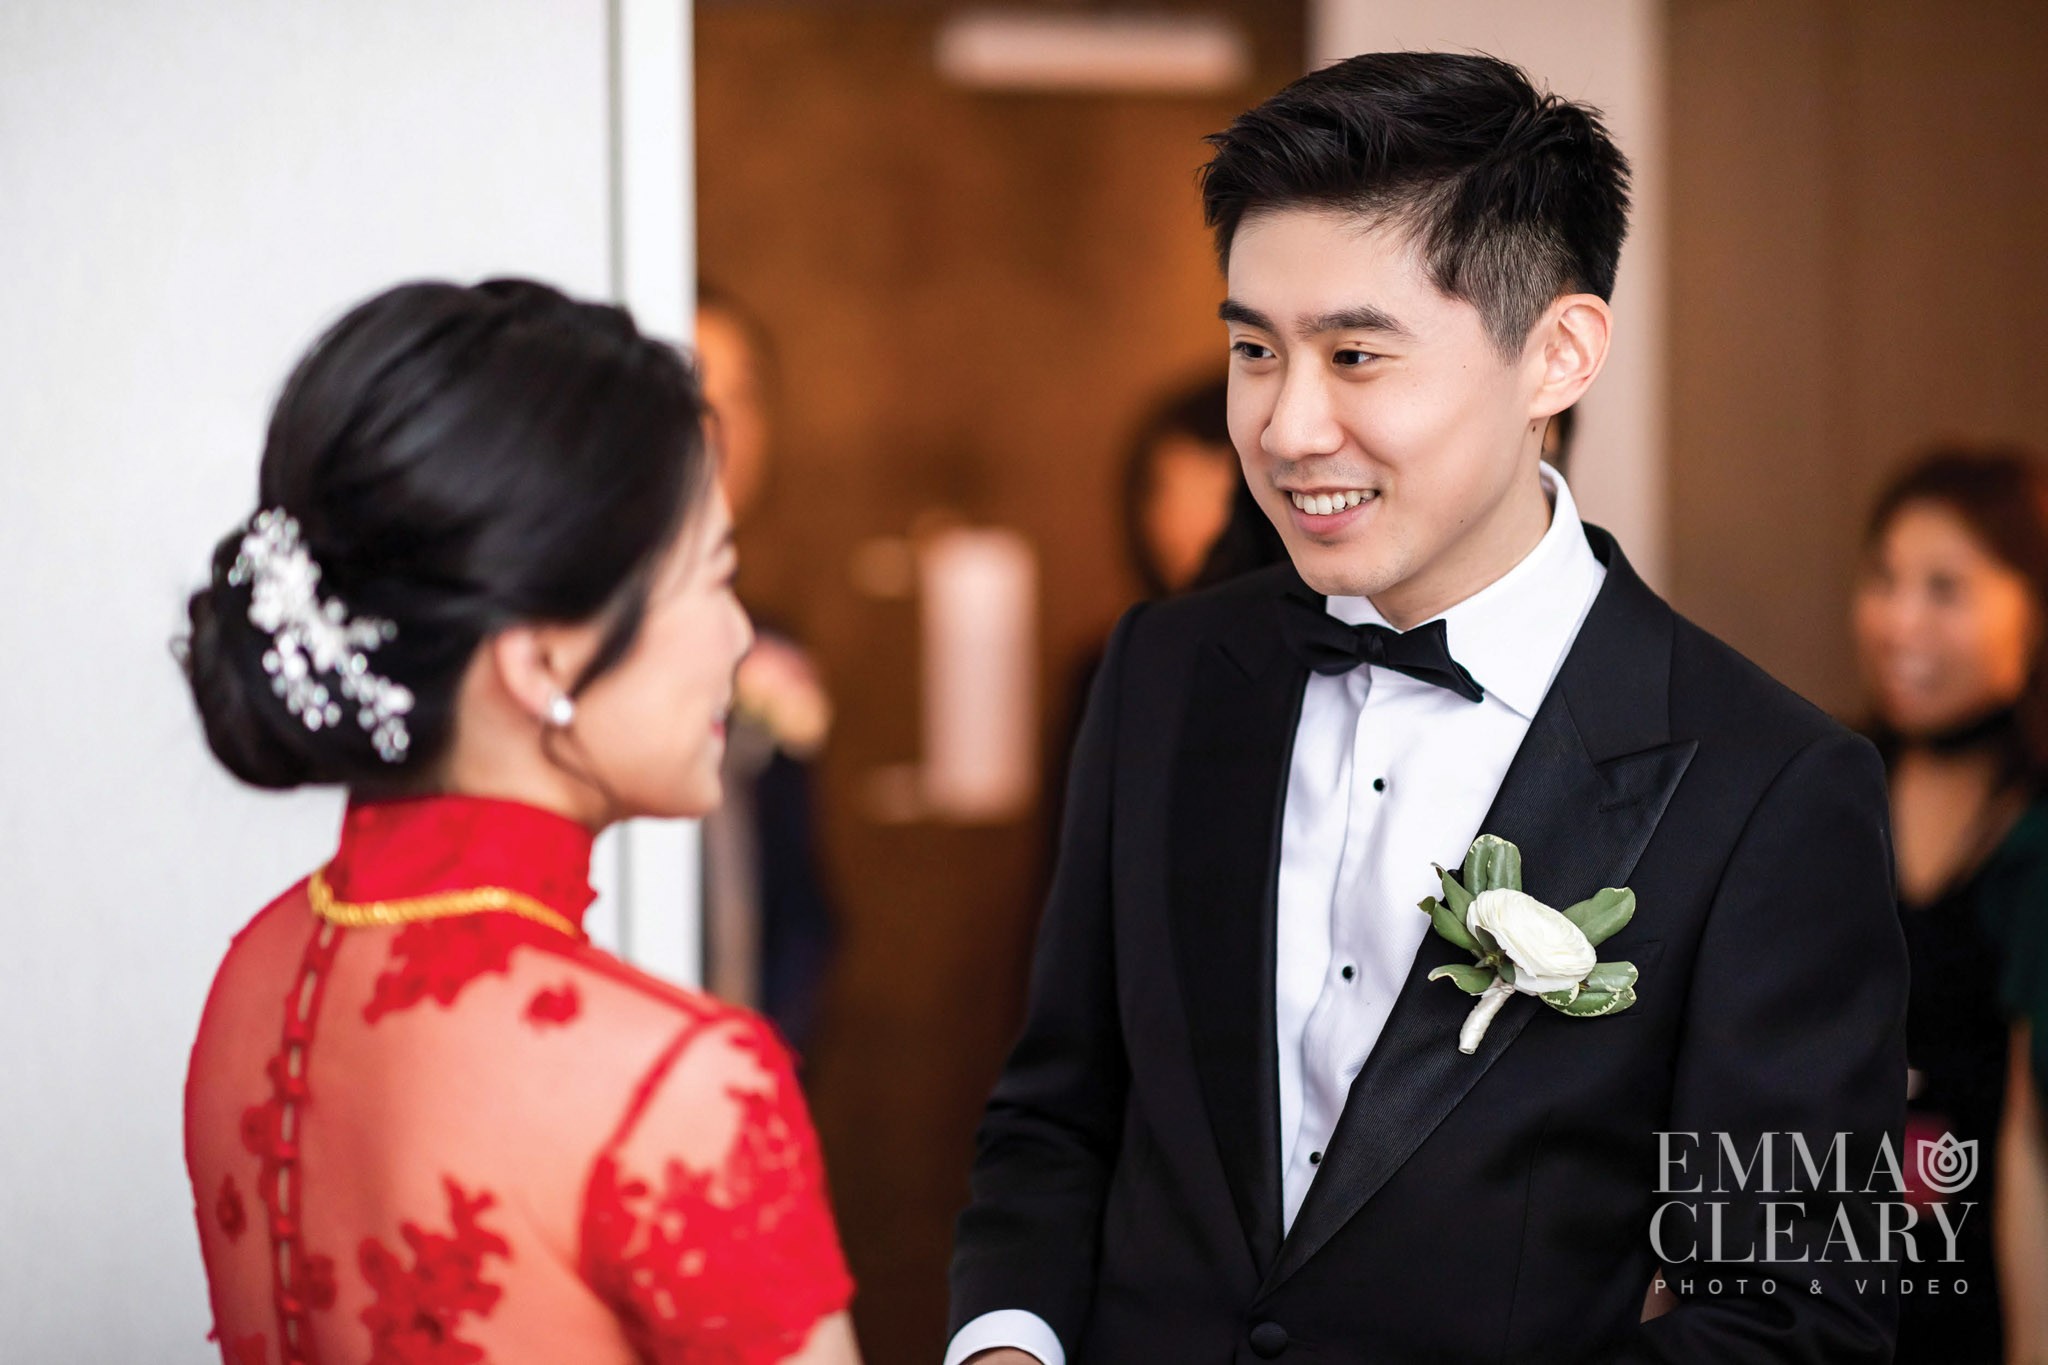 Chinese wedding photo